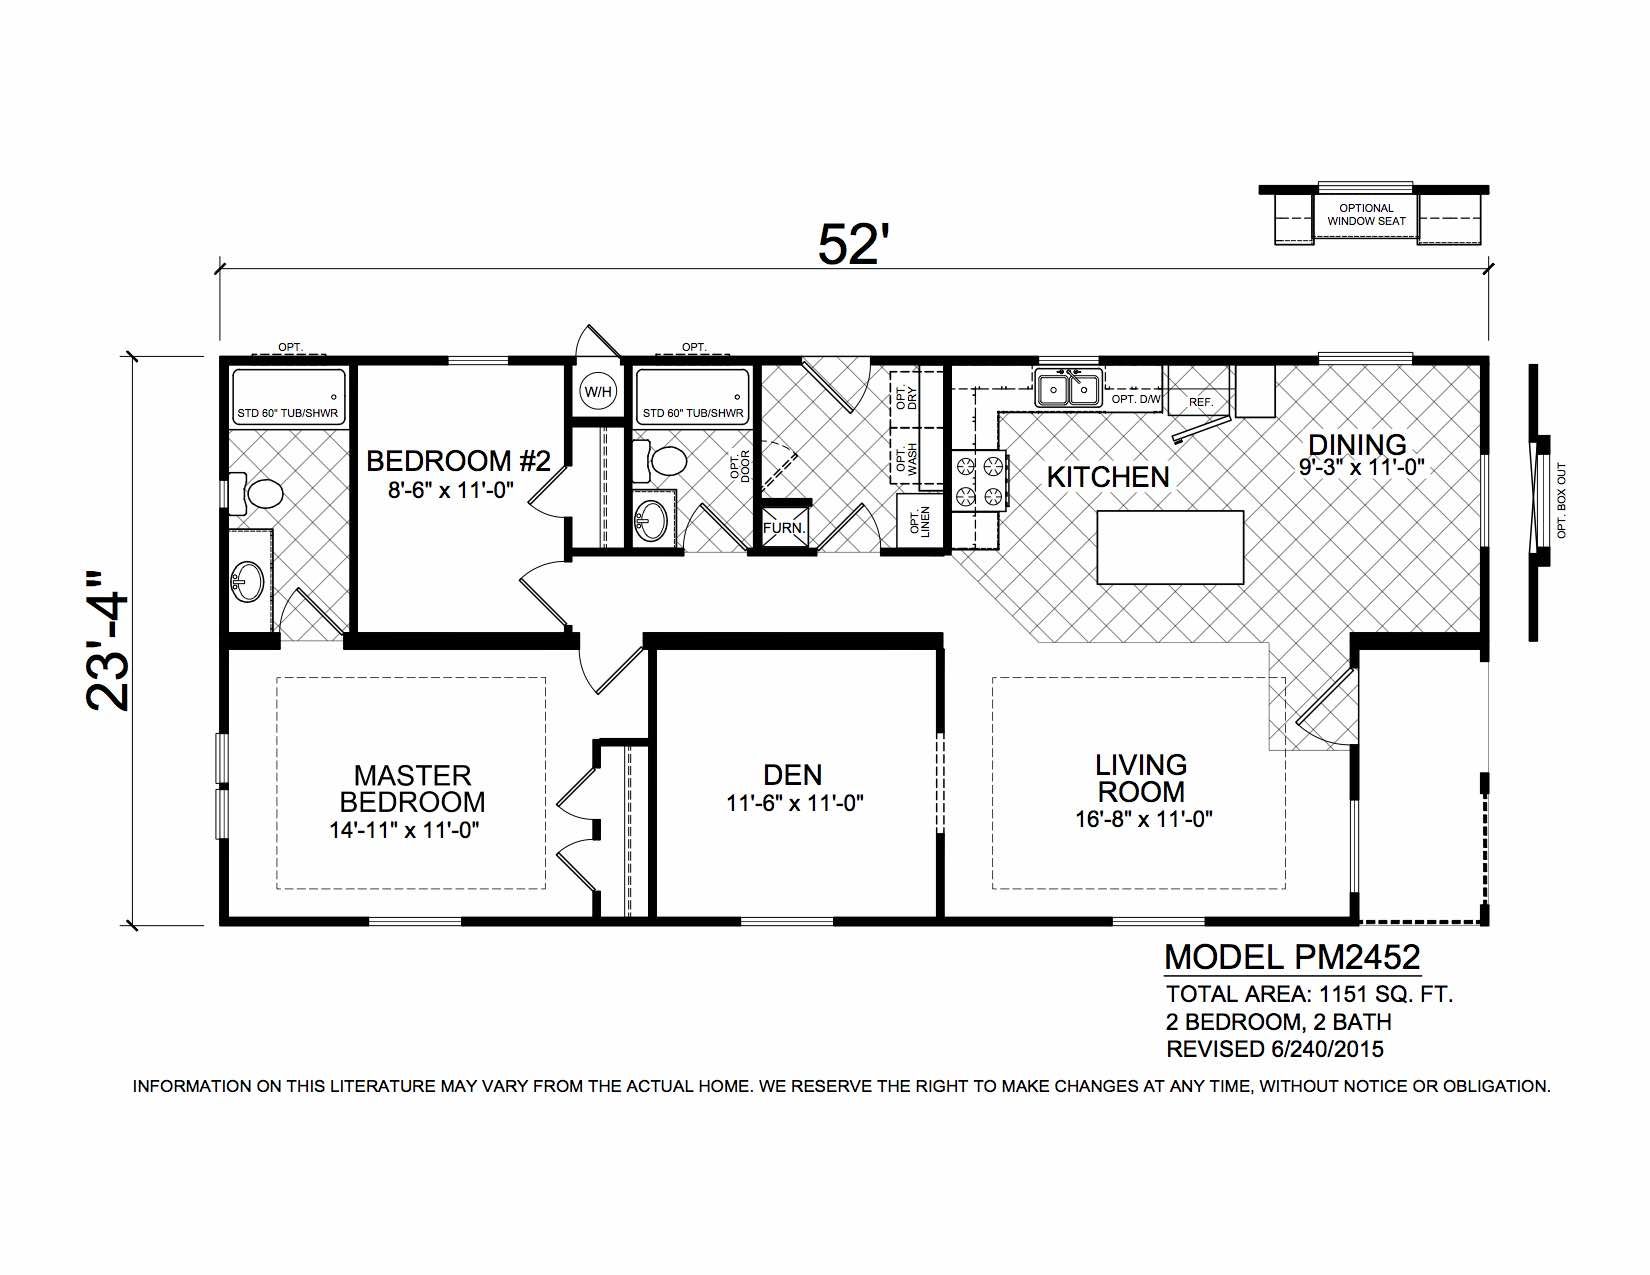 Homes Direct Modular Homes - Model PM2452 - Floorplan